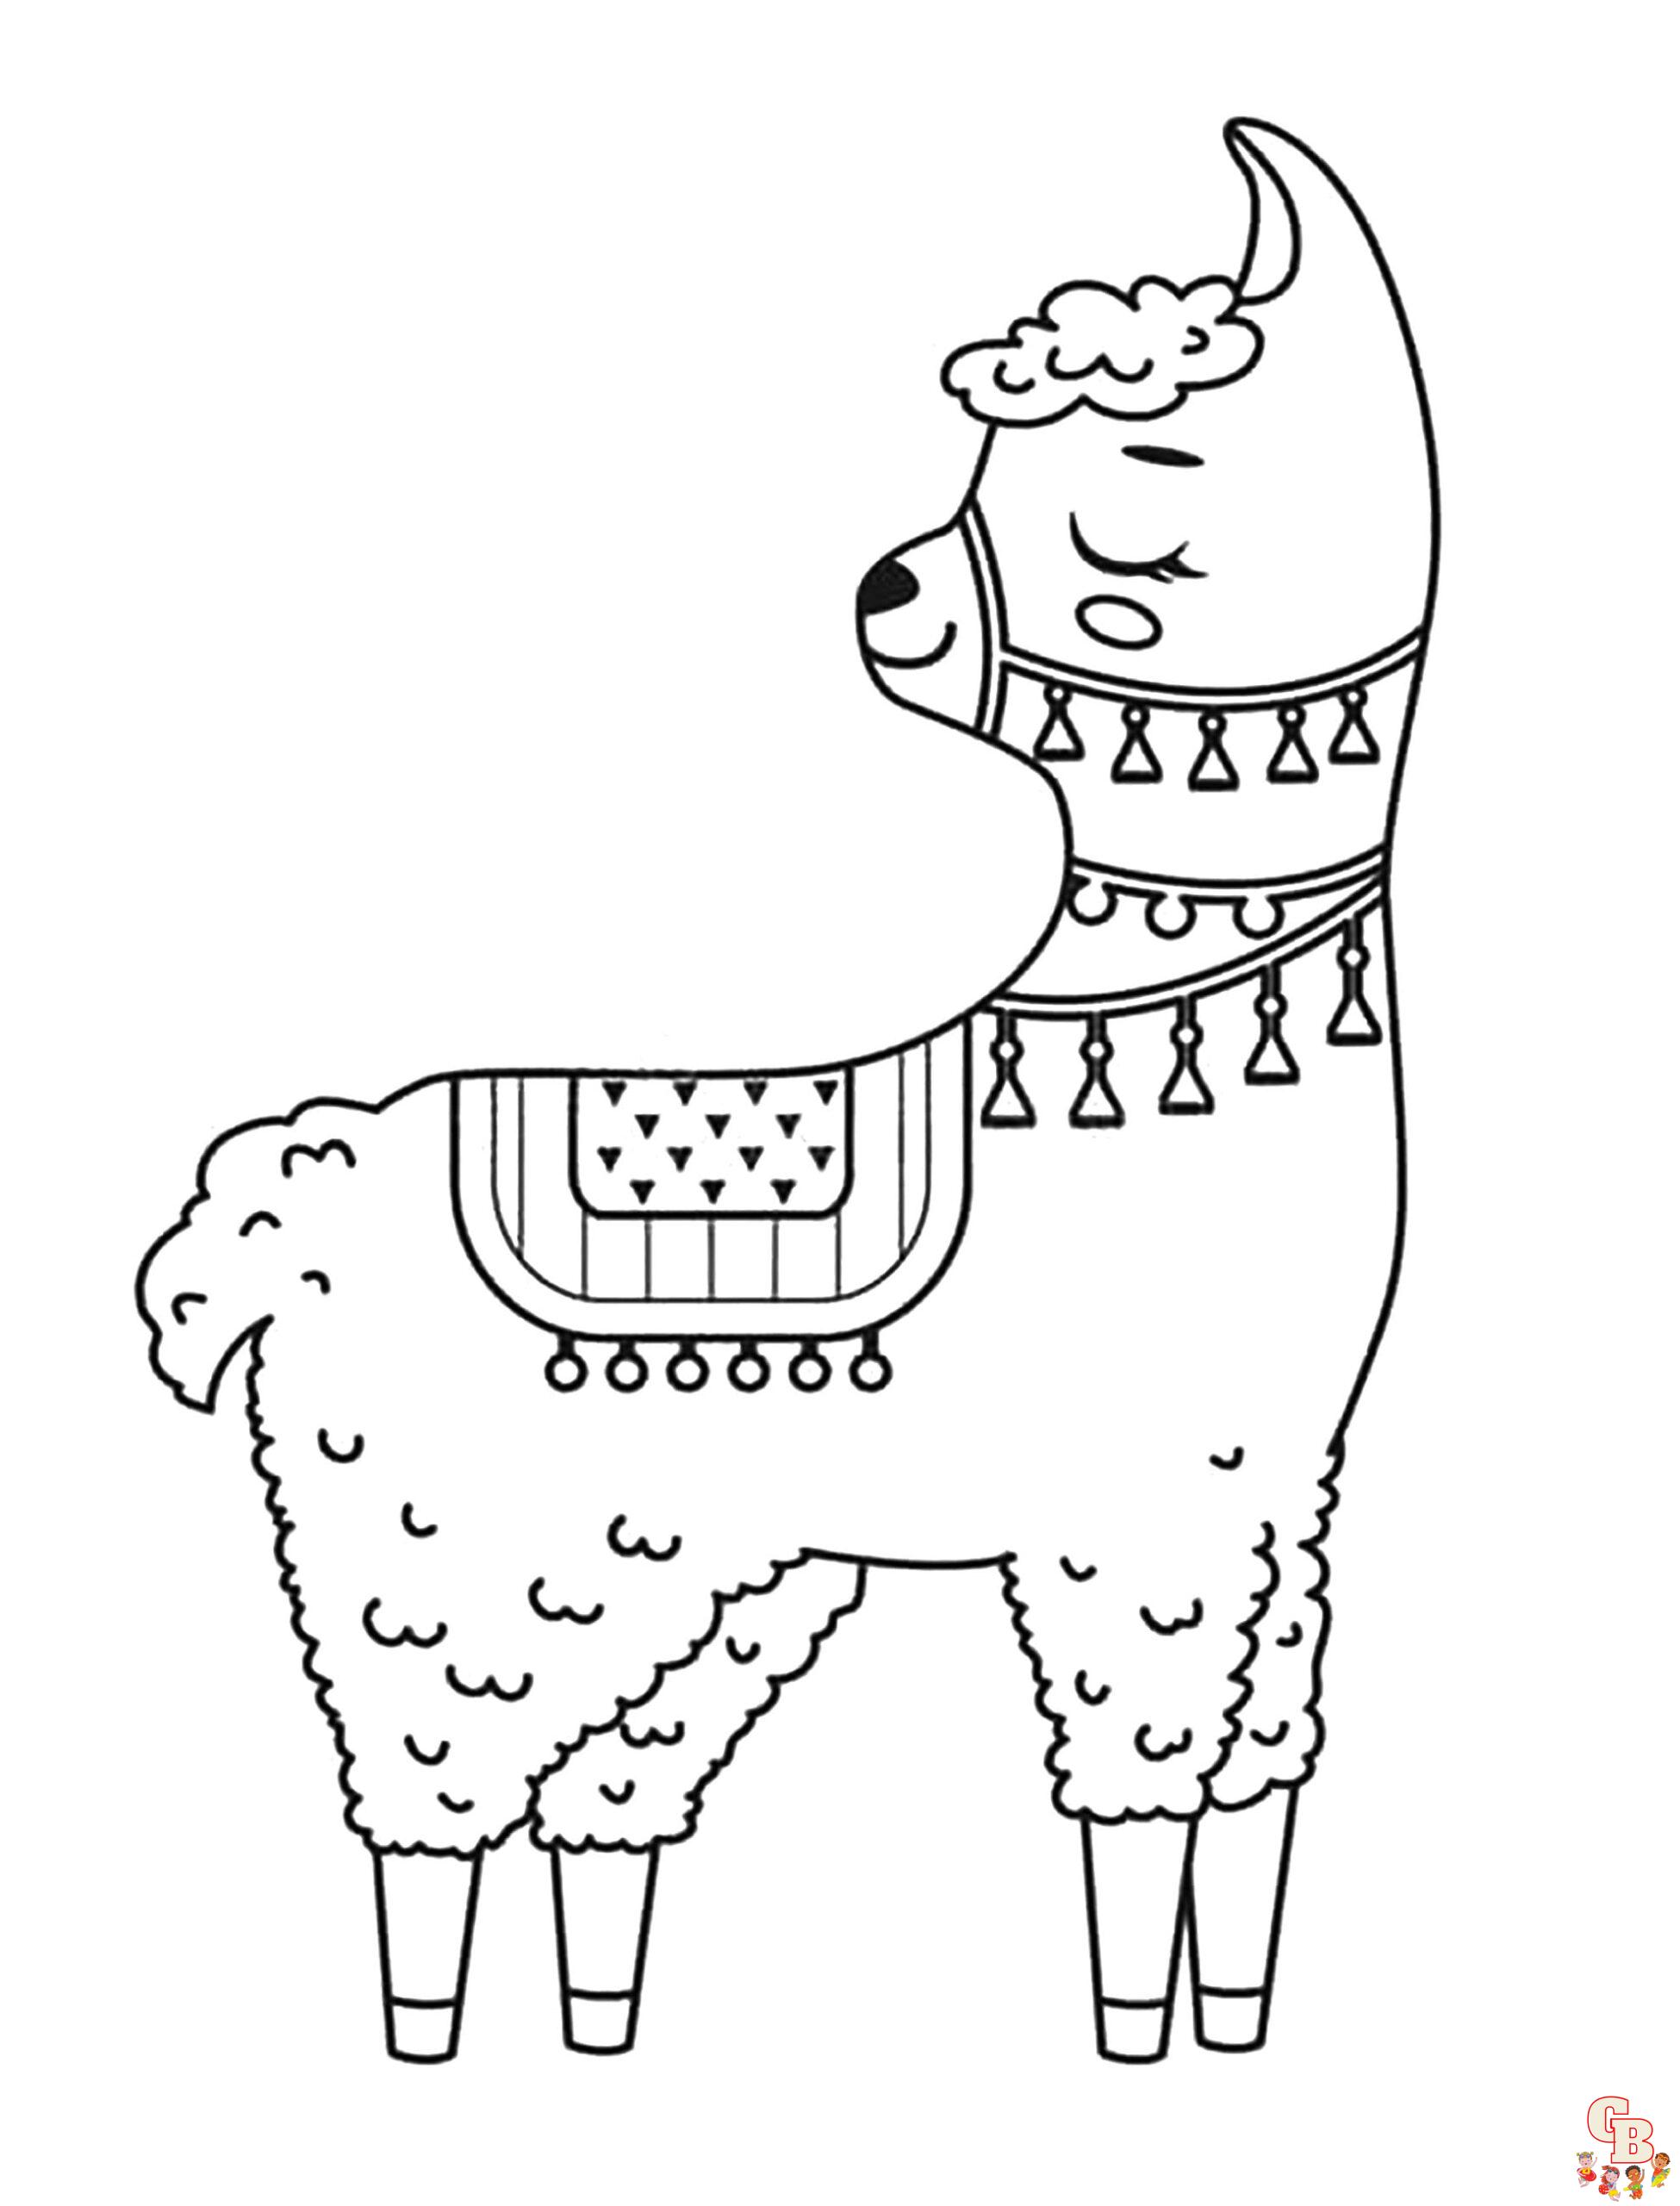 Lamas ausmalbilder kostenlos